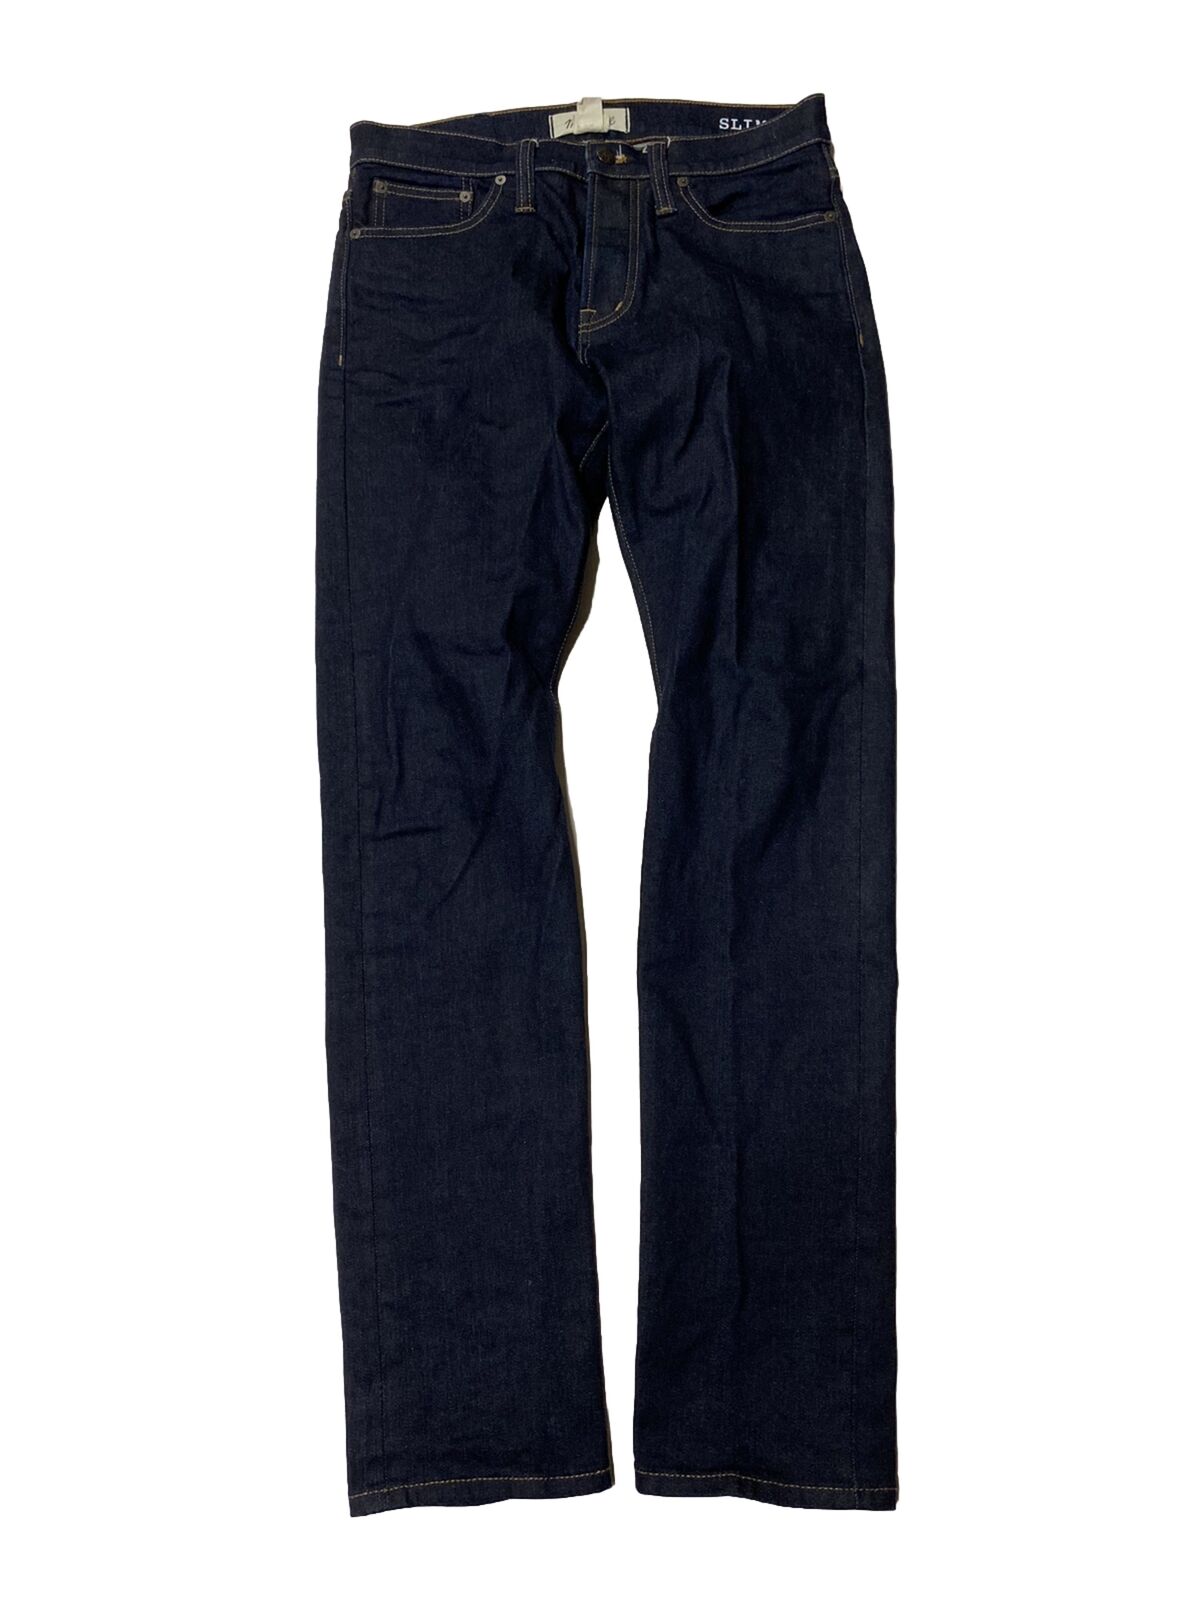 Madewell Selvedge Denim Slim Jeans Mens 30 X 32 Dark Blue Fair Trade Red Line